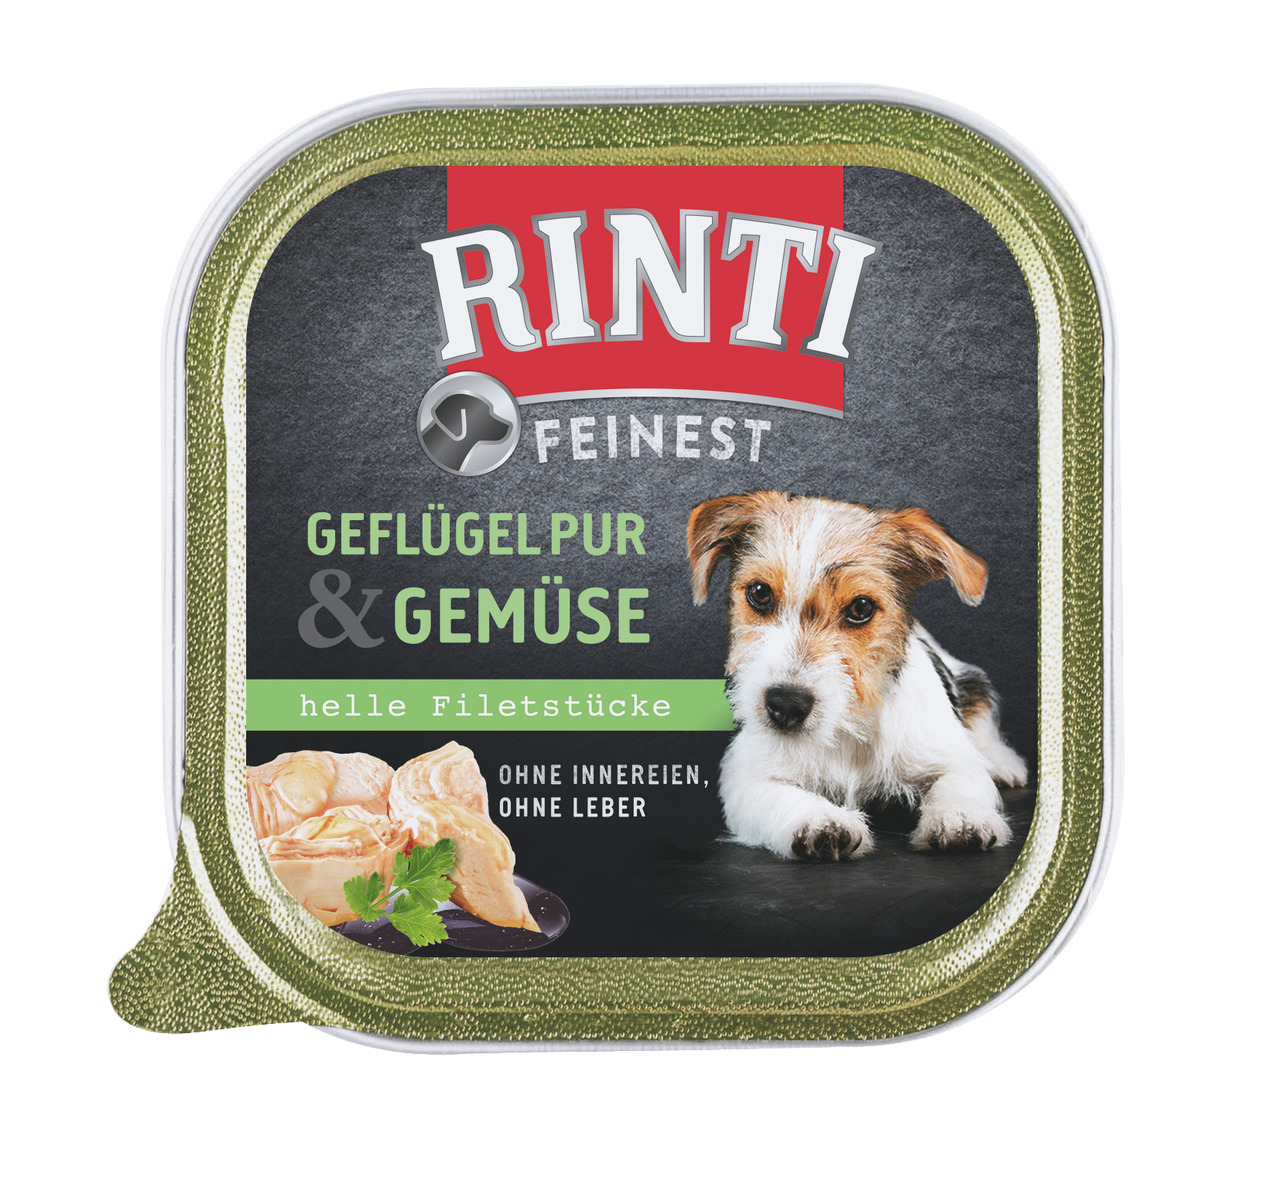 RINTI Feinest Geflügel Pur & Gemüse 150g Schale Hundenassfutter